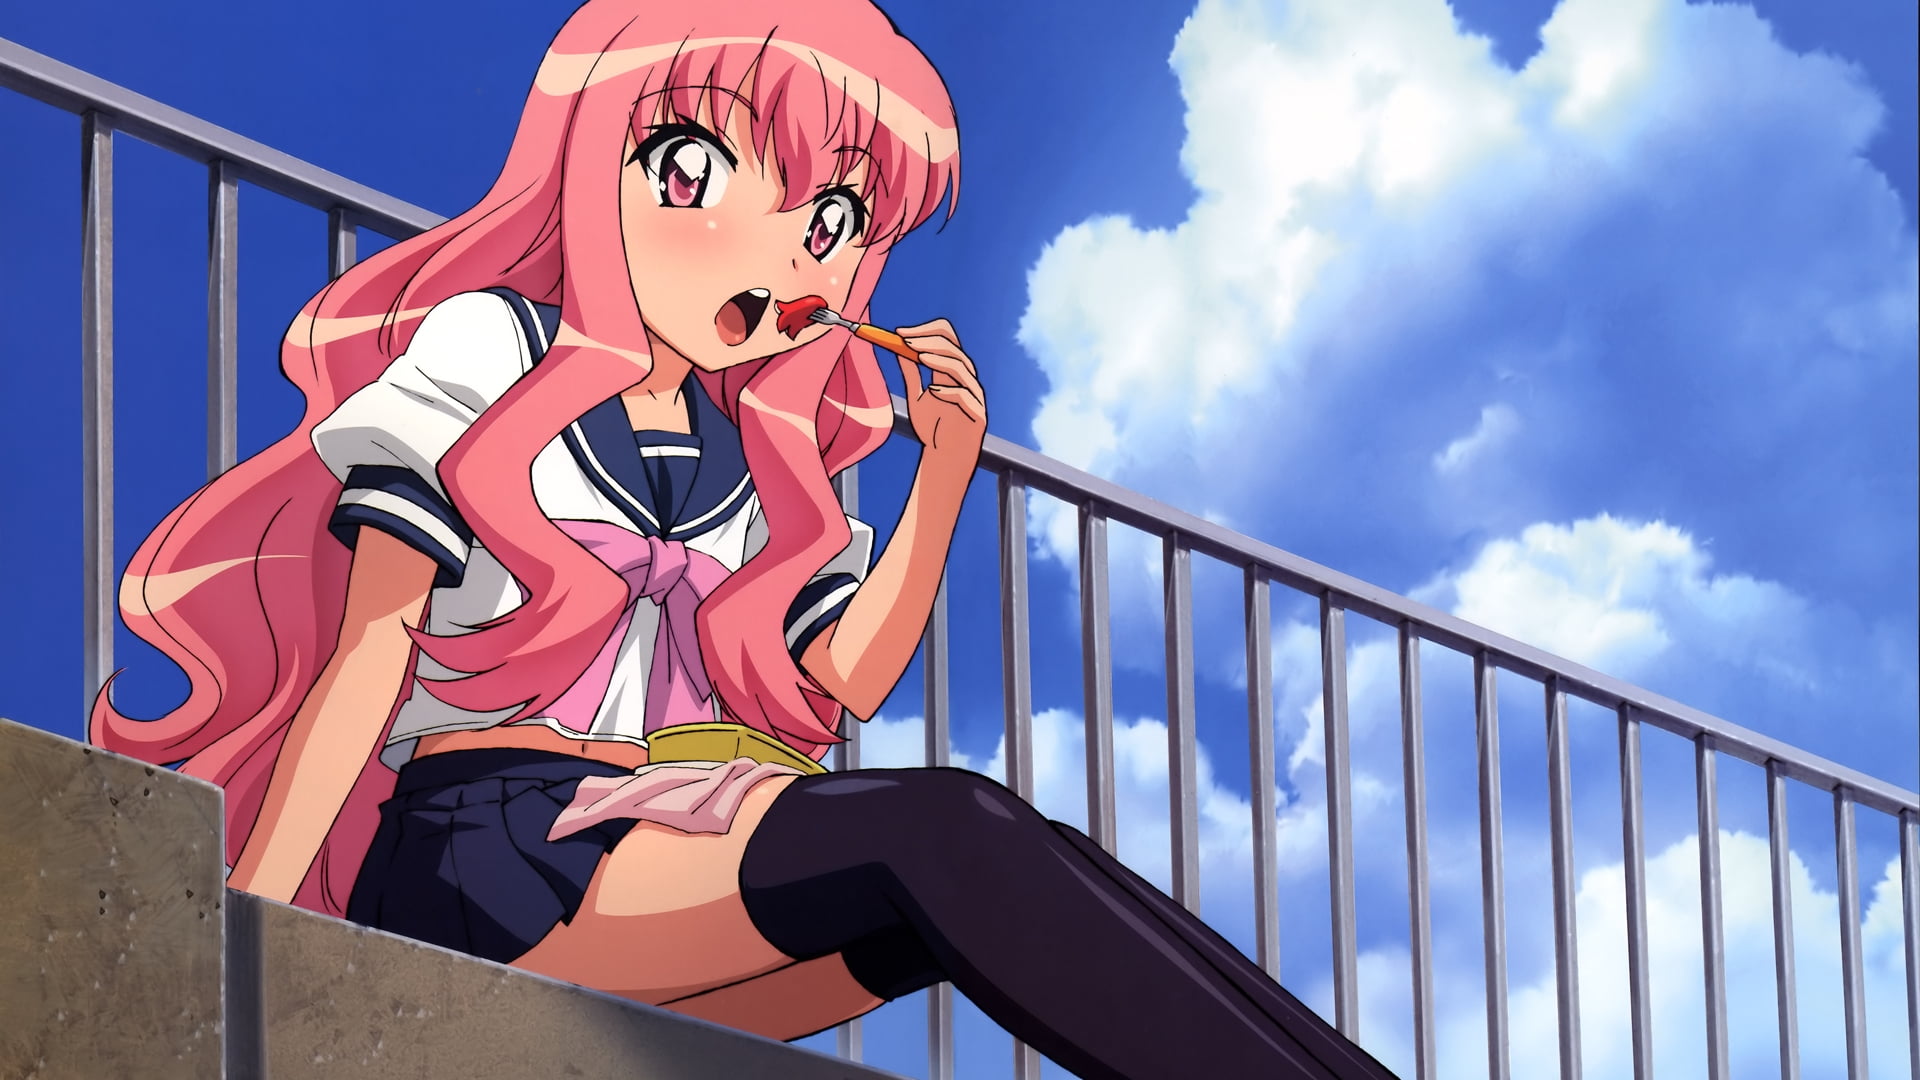 woman in school uniform anime character illustration